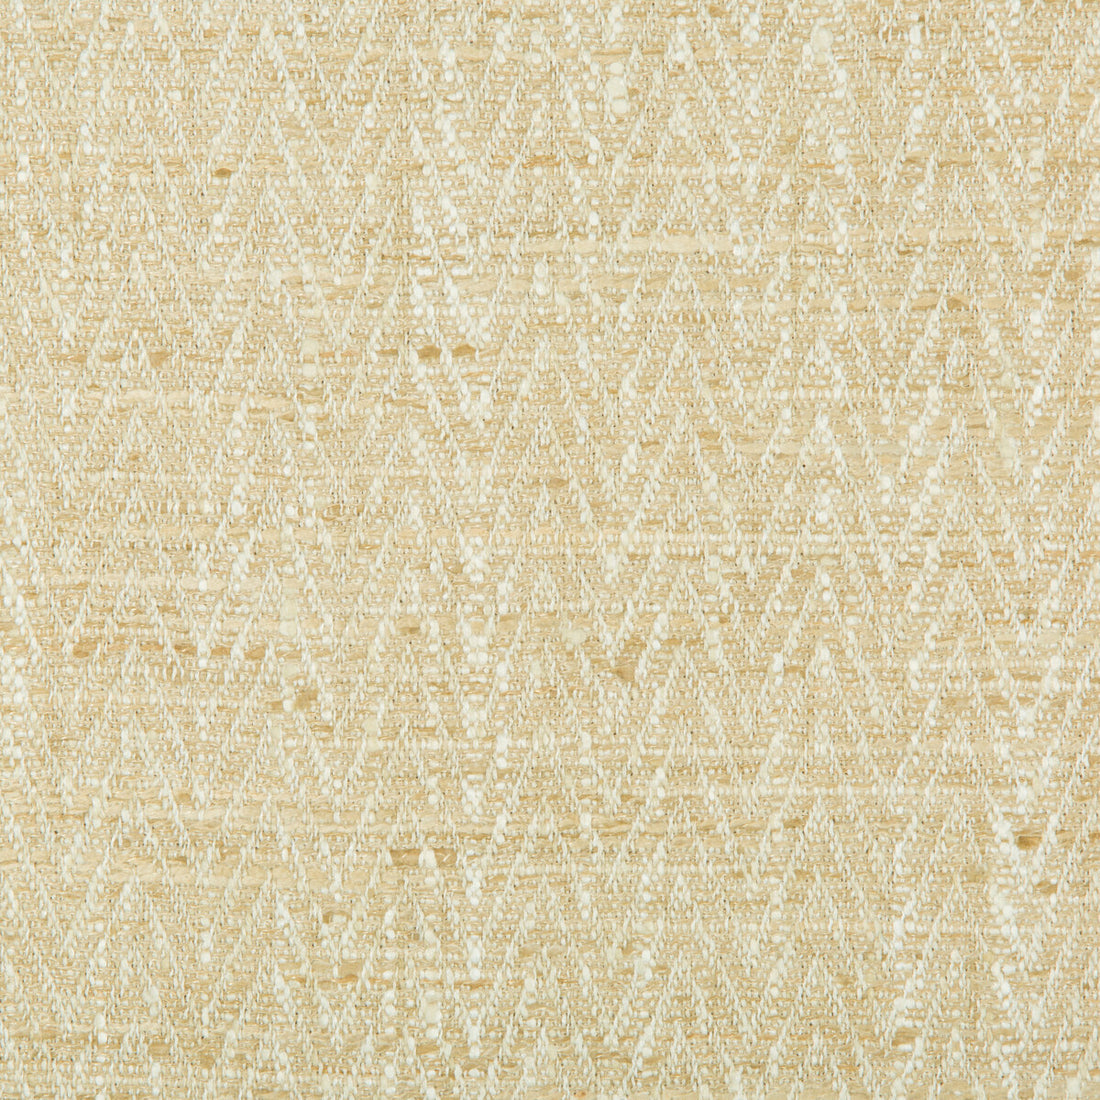 Kravet Smart fabric in 34092-16 color - pattern 34092.16.0 - by Kravet Smart